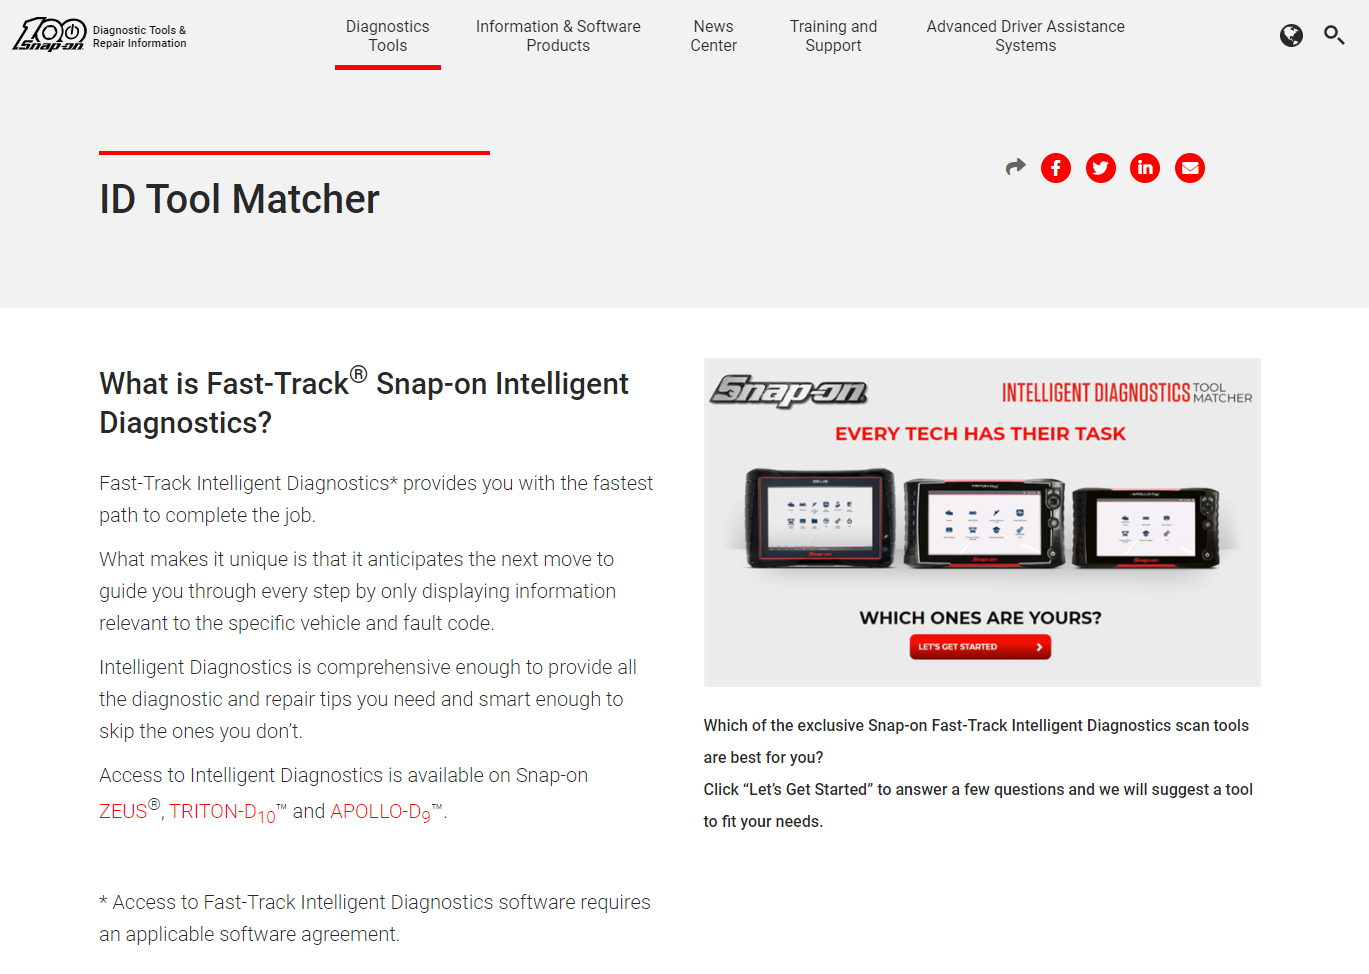 Fast-Track Intelligent Diagnostics Tool Matcher